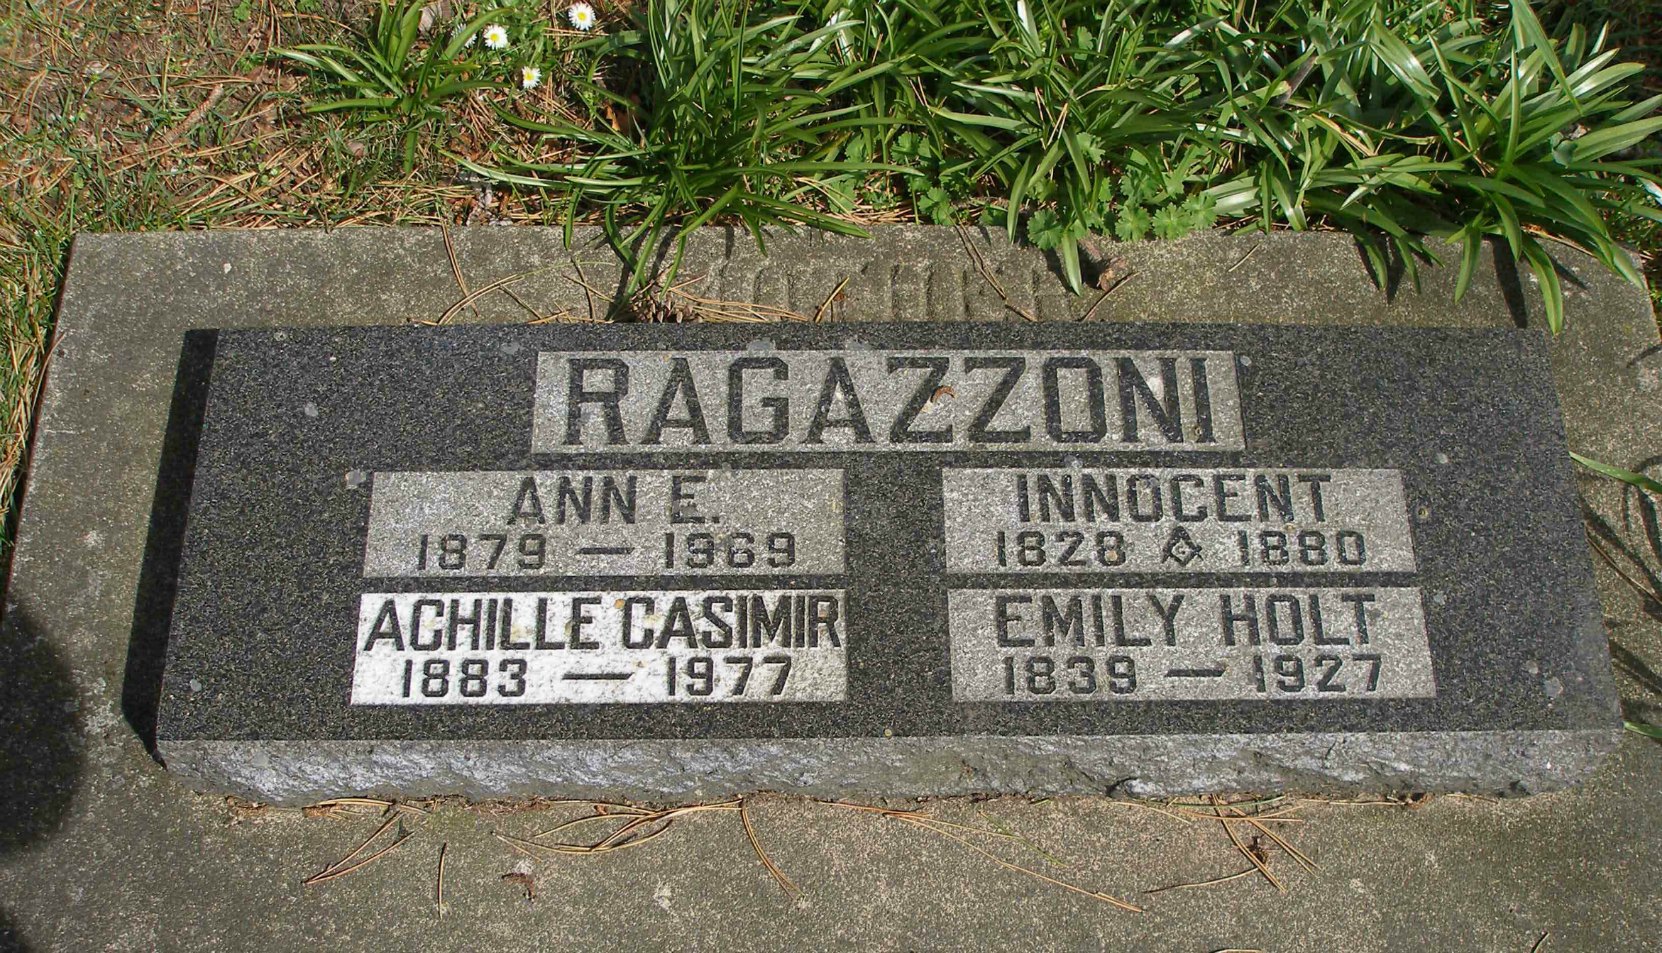 Headstone on Innocent Ragazzoni grave, Ross Bay Cemetery, Victoria, B.C. Note the Square & Compasses under Innocent Ragazzoni's name.